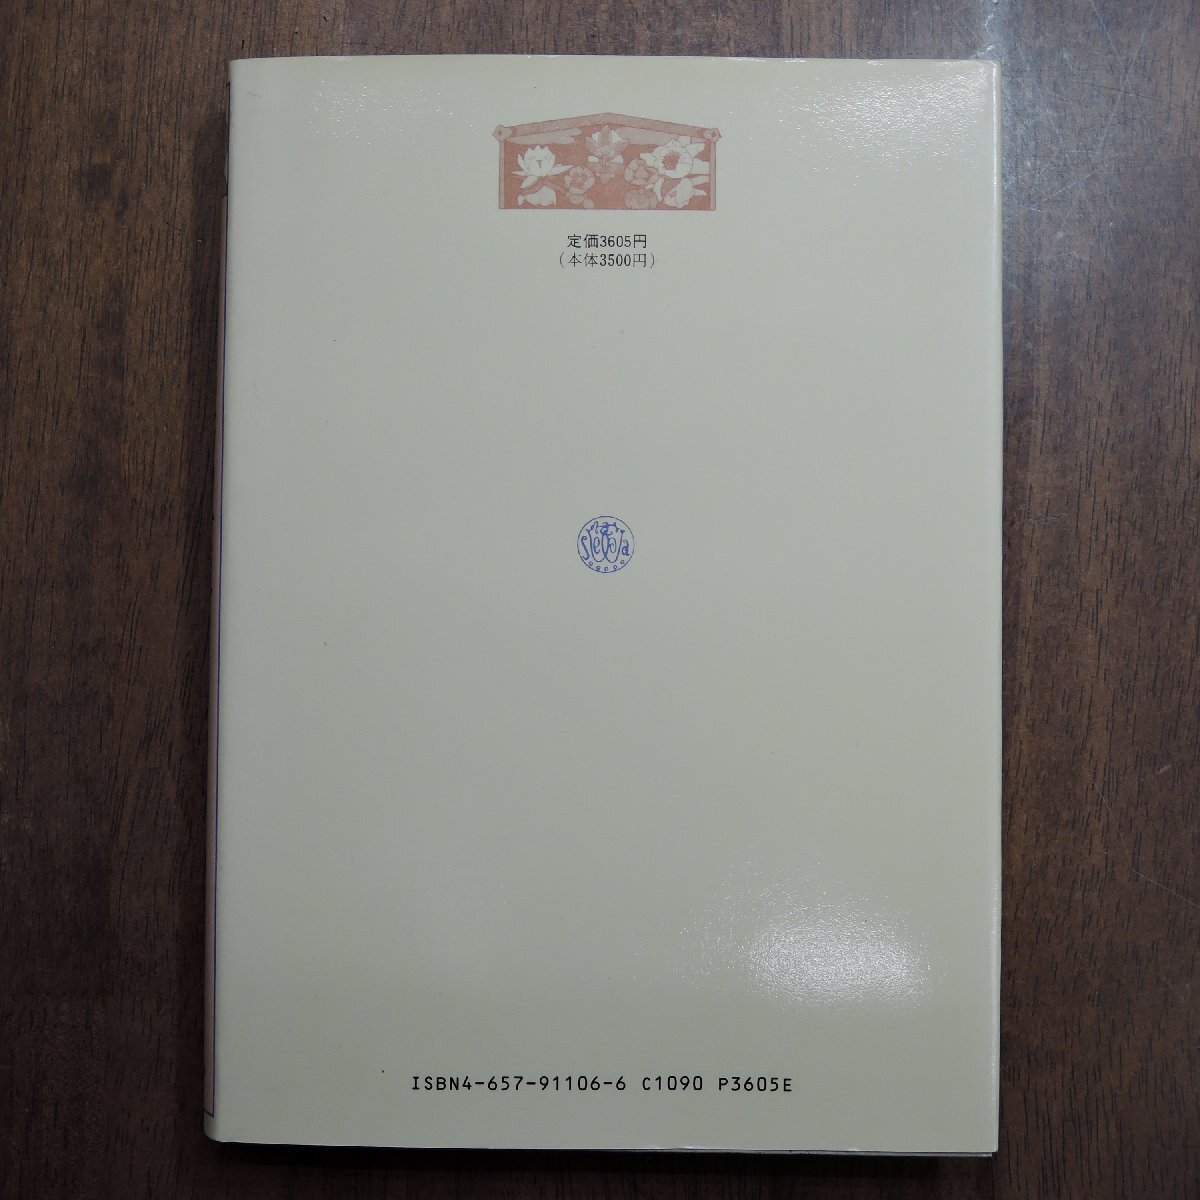 * Russia folk tale. world wistaria marsh hing . compilation work Waseda university publish part regular price 3605 jpy 1991 year the first version 